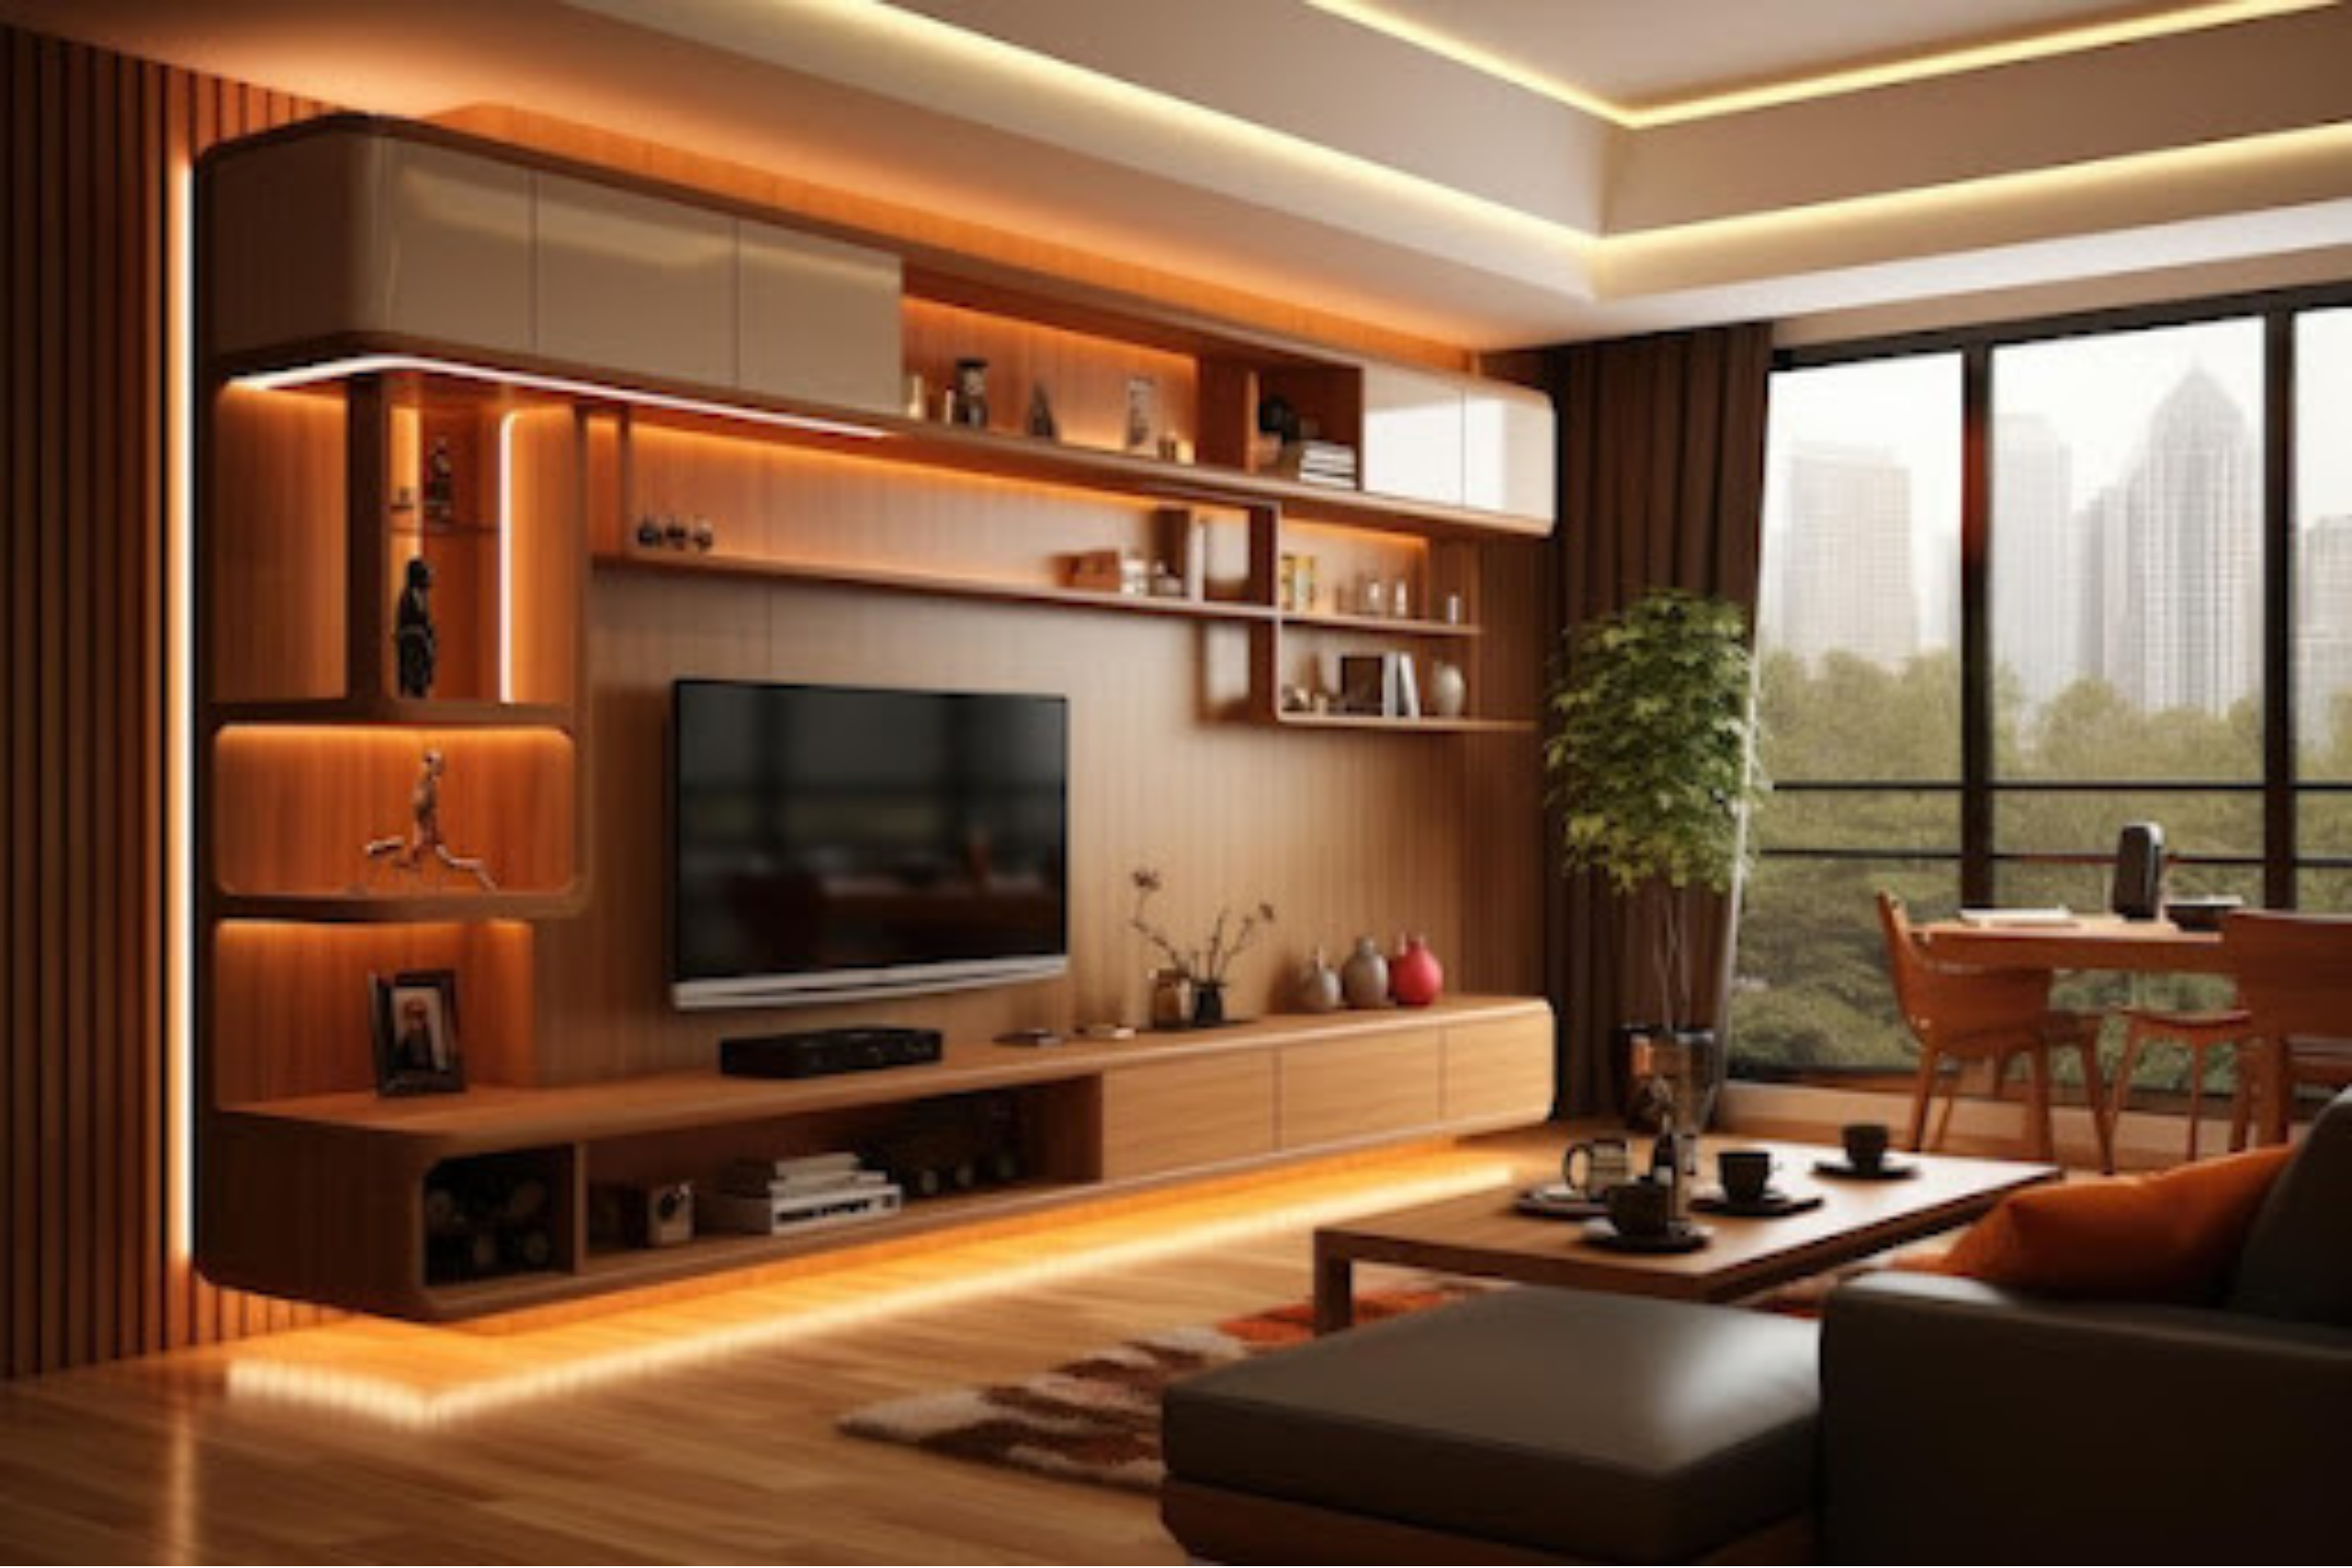 Stylish TV Unit Design Ideas for Living Room